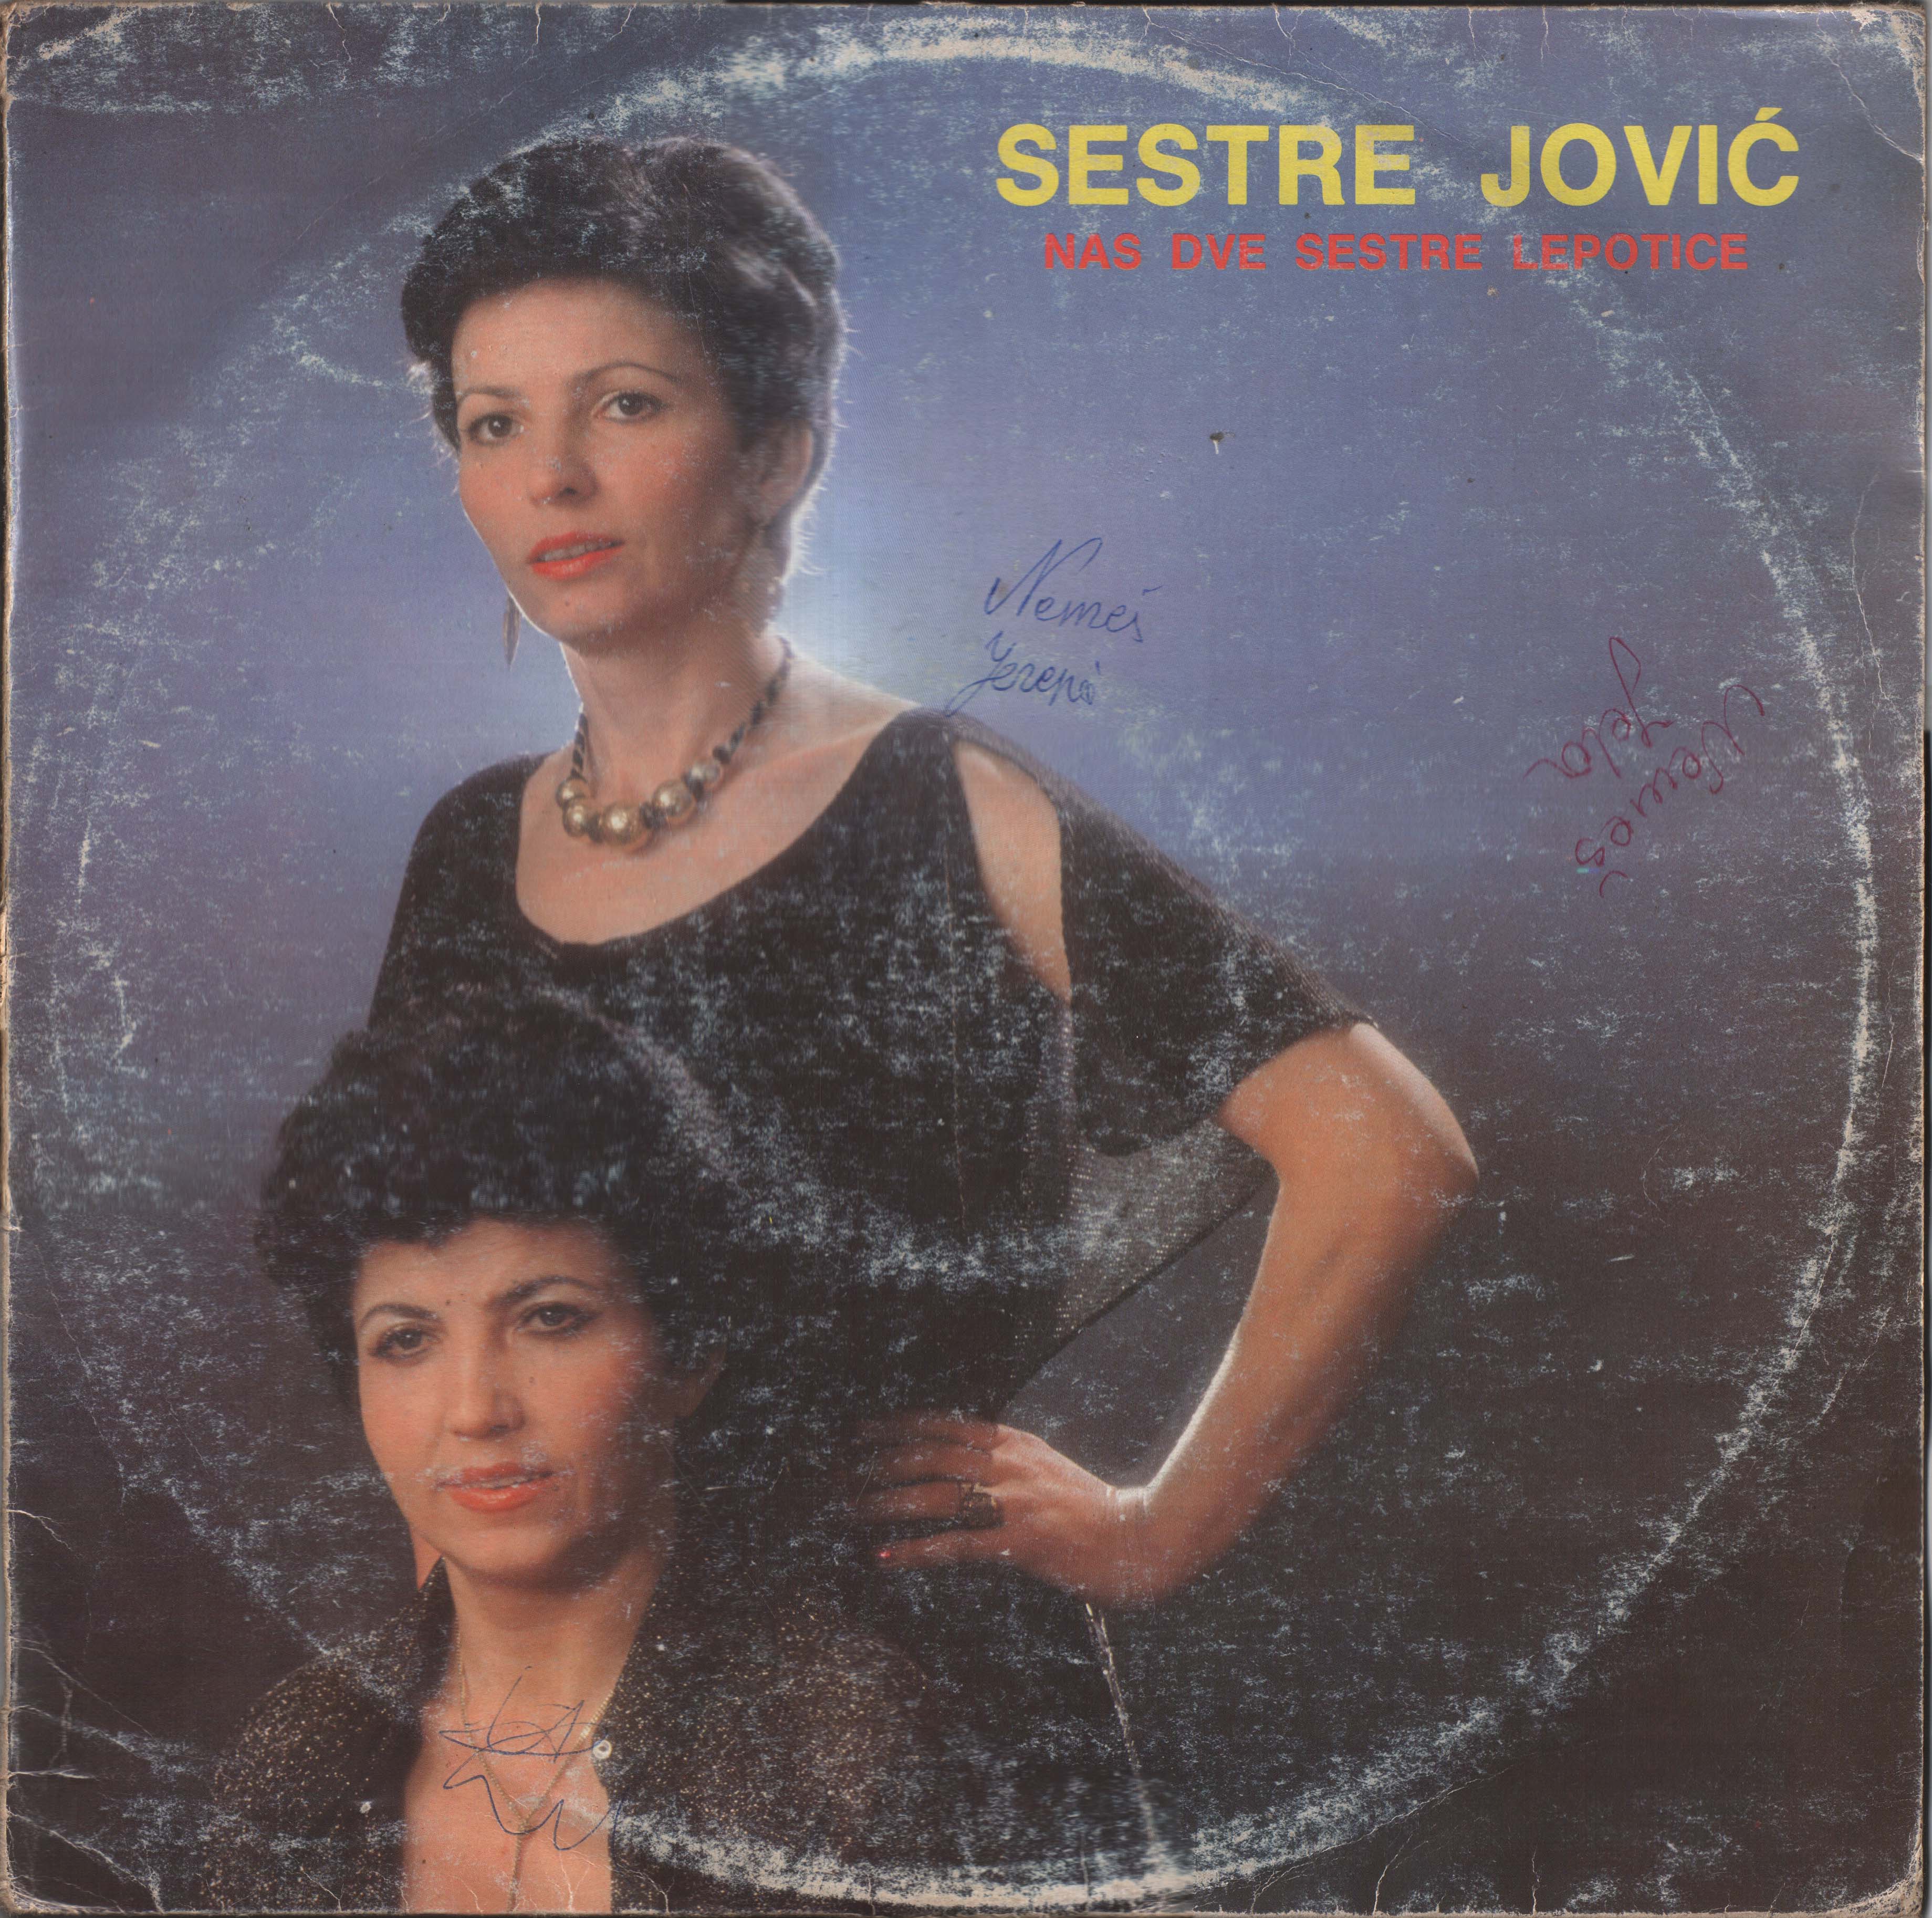 Sestre Jovic 1983 P